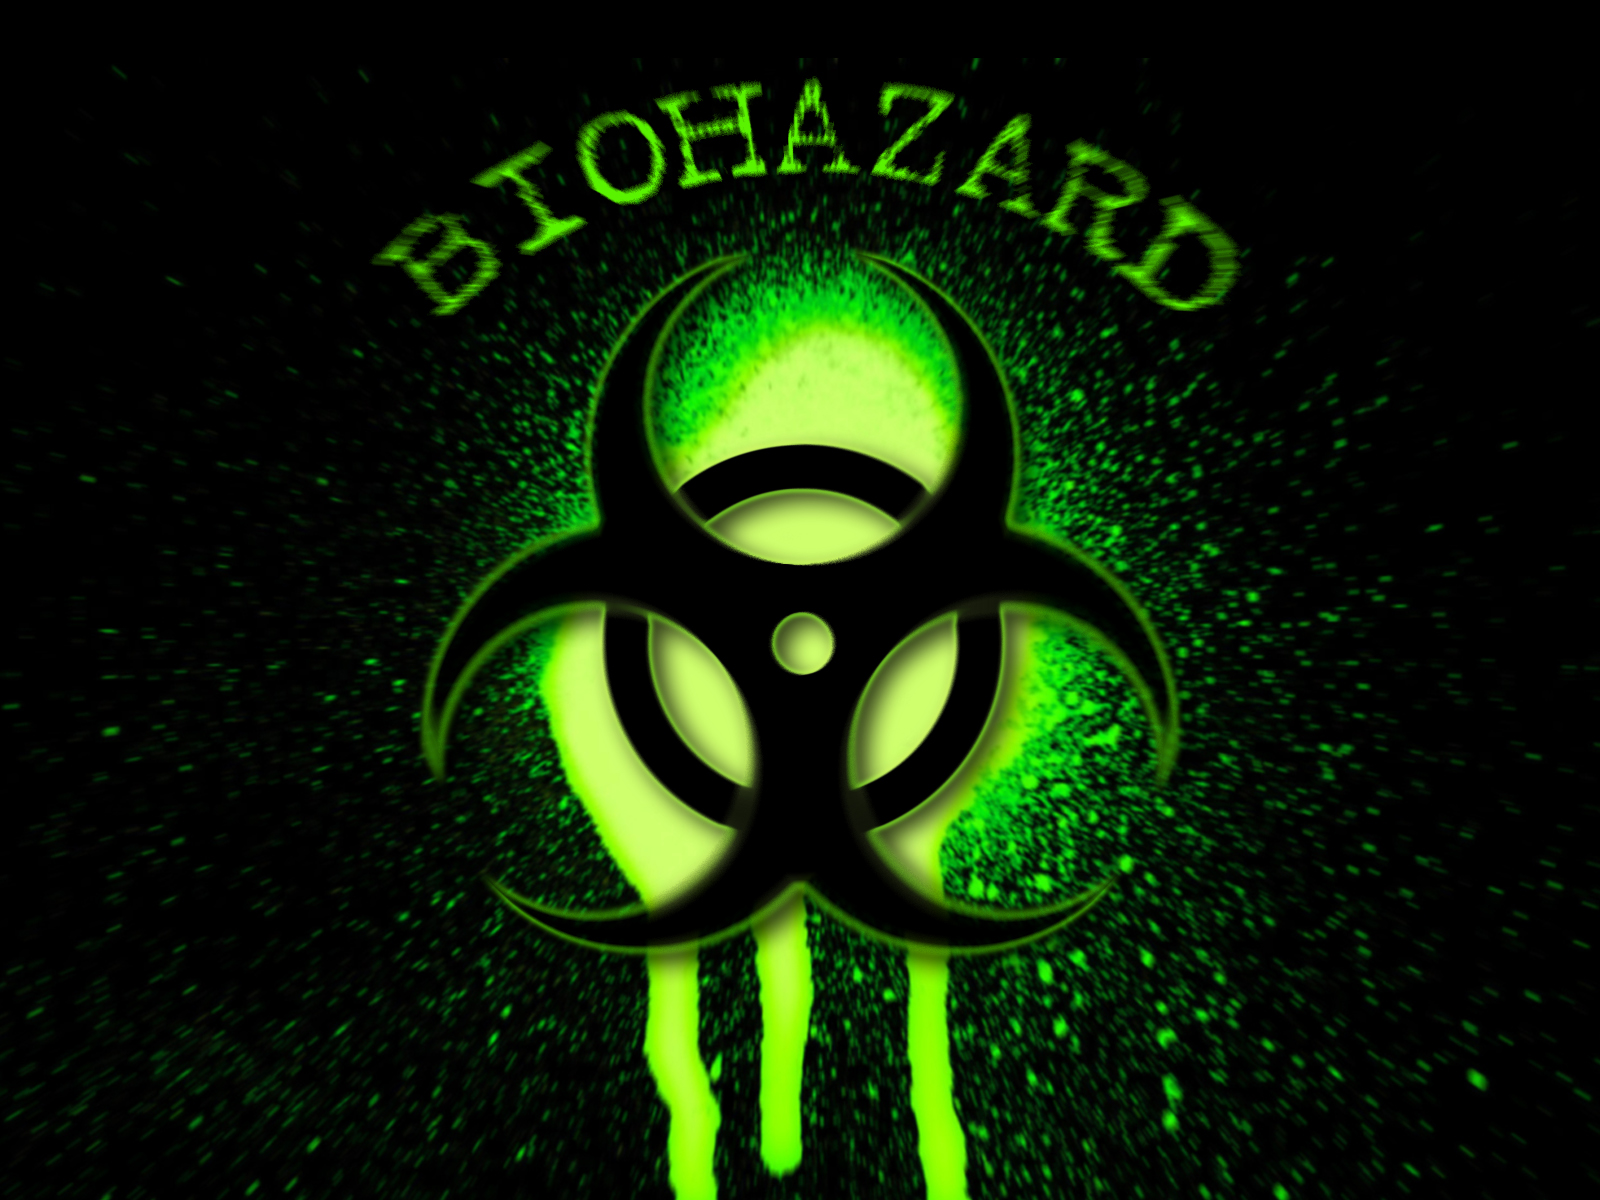 Image gallery for : biohazard symbol desktop wallpaper